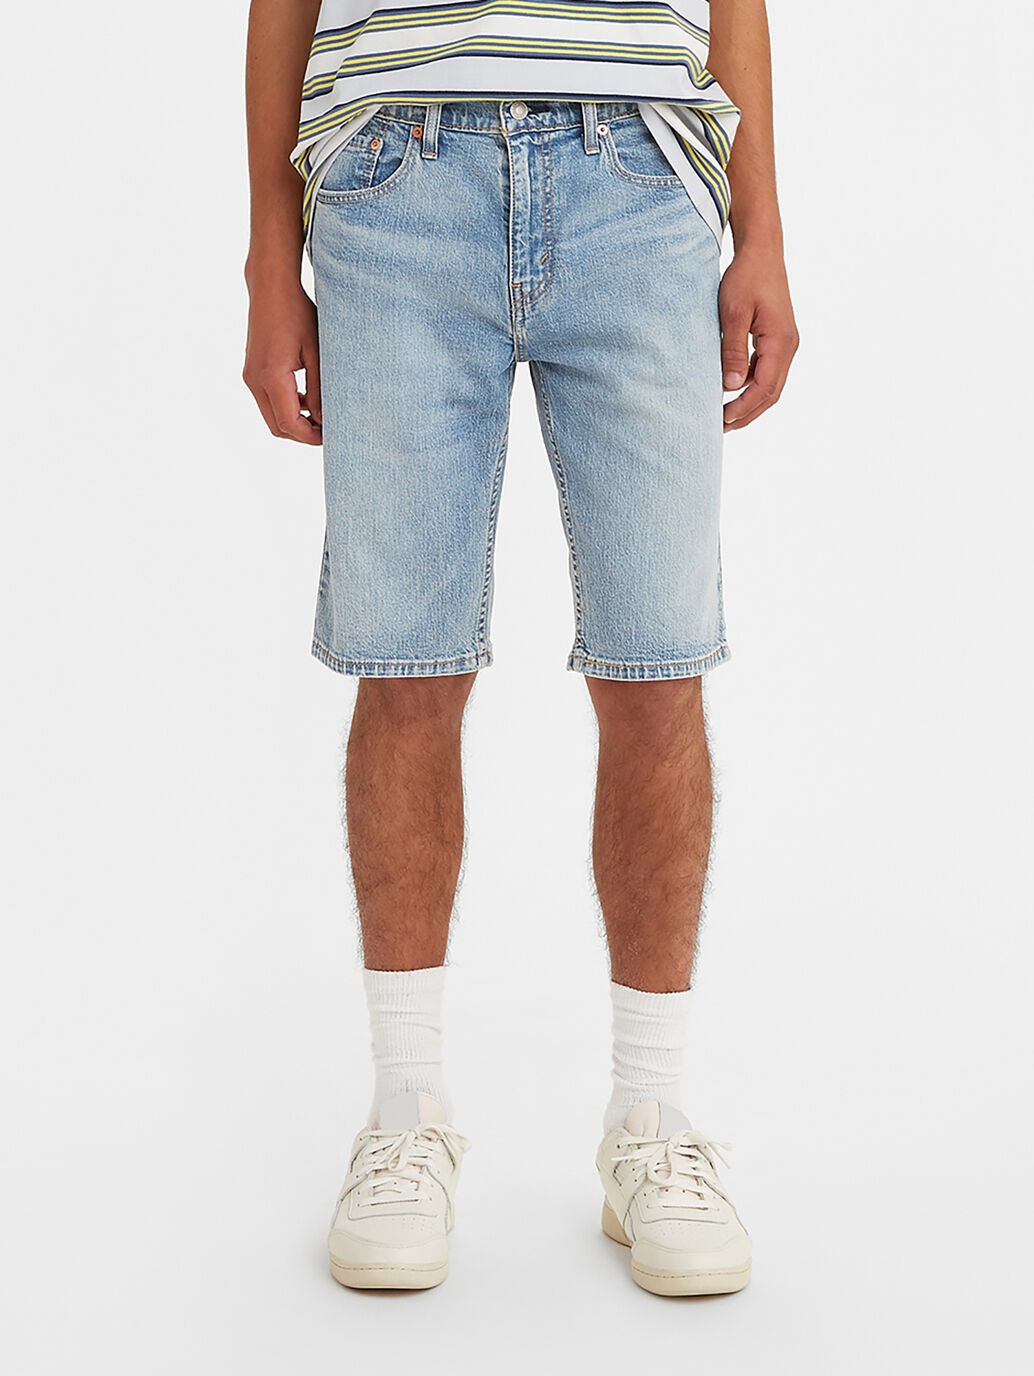 Rhino and Glacier Blue PlainSolid Premium Cotton Shorts For Men